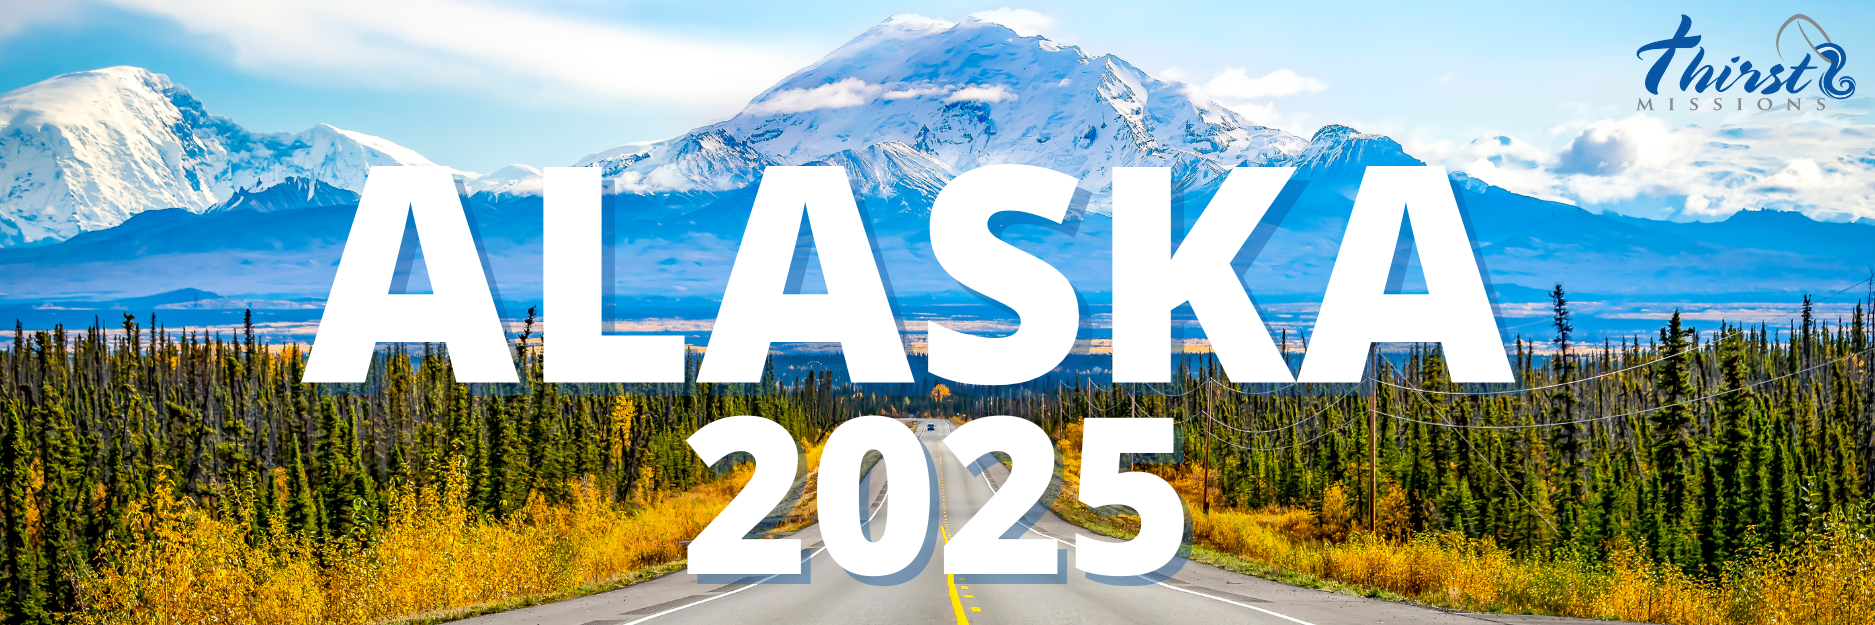 Alaska 2025